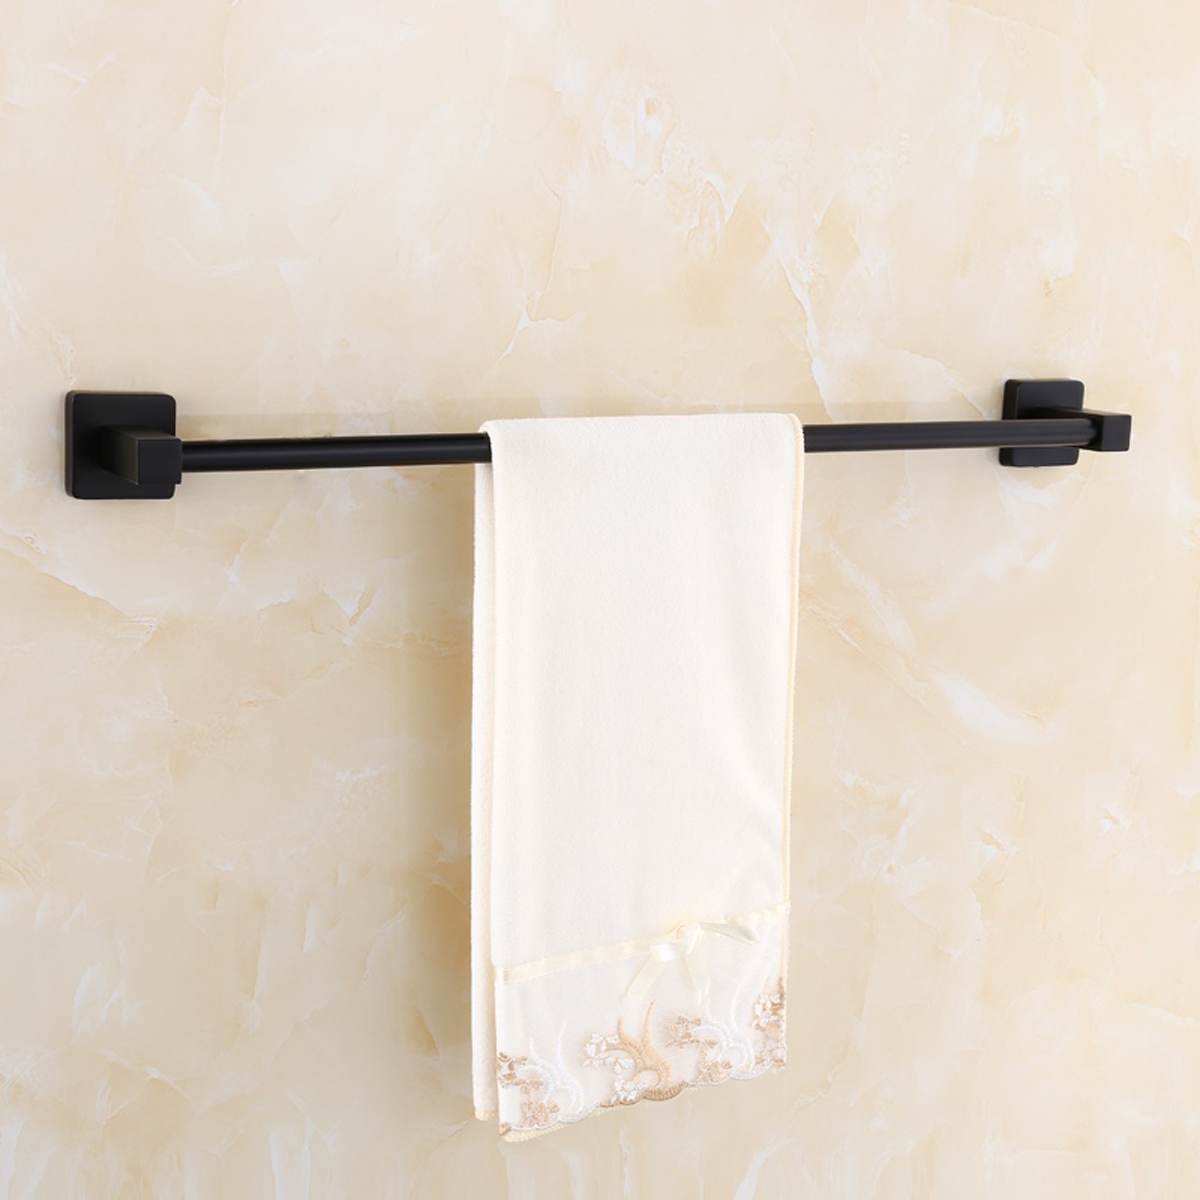 

Matt Black Square Towel Holder Rack Bathroom Shower Toilet Wall Mount Clothes Bar Rail Hanger